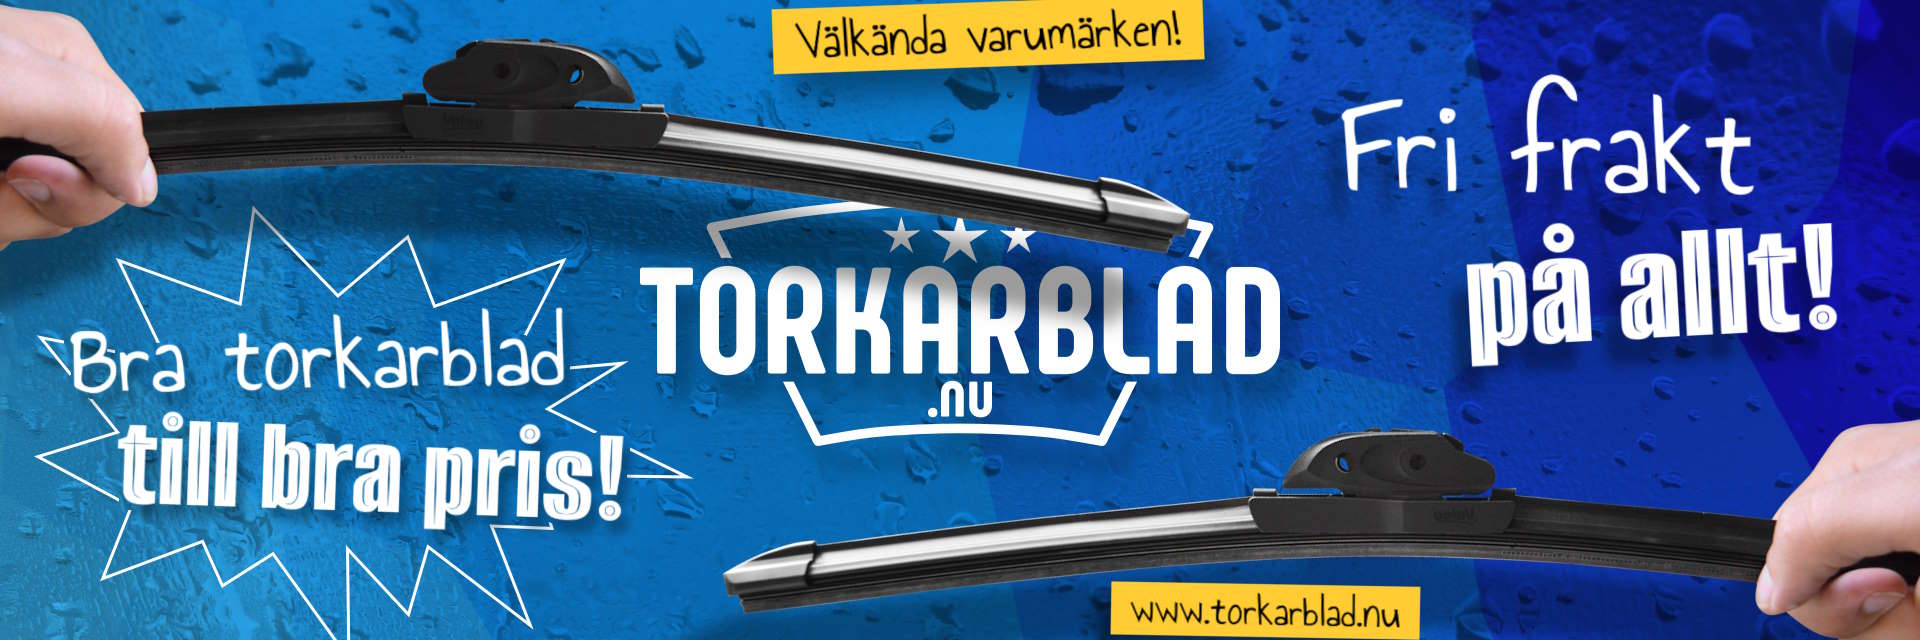 Torkarblad.nu annonsbanner - Vi säljer torkarblad online